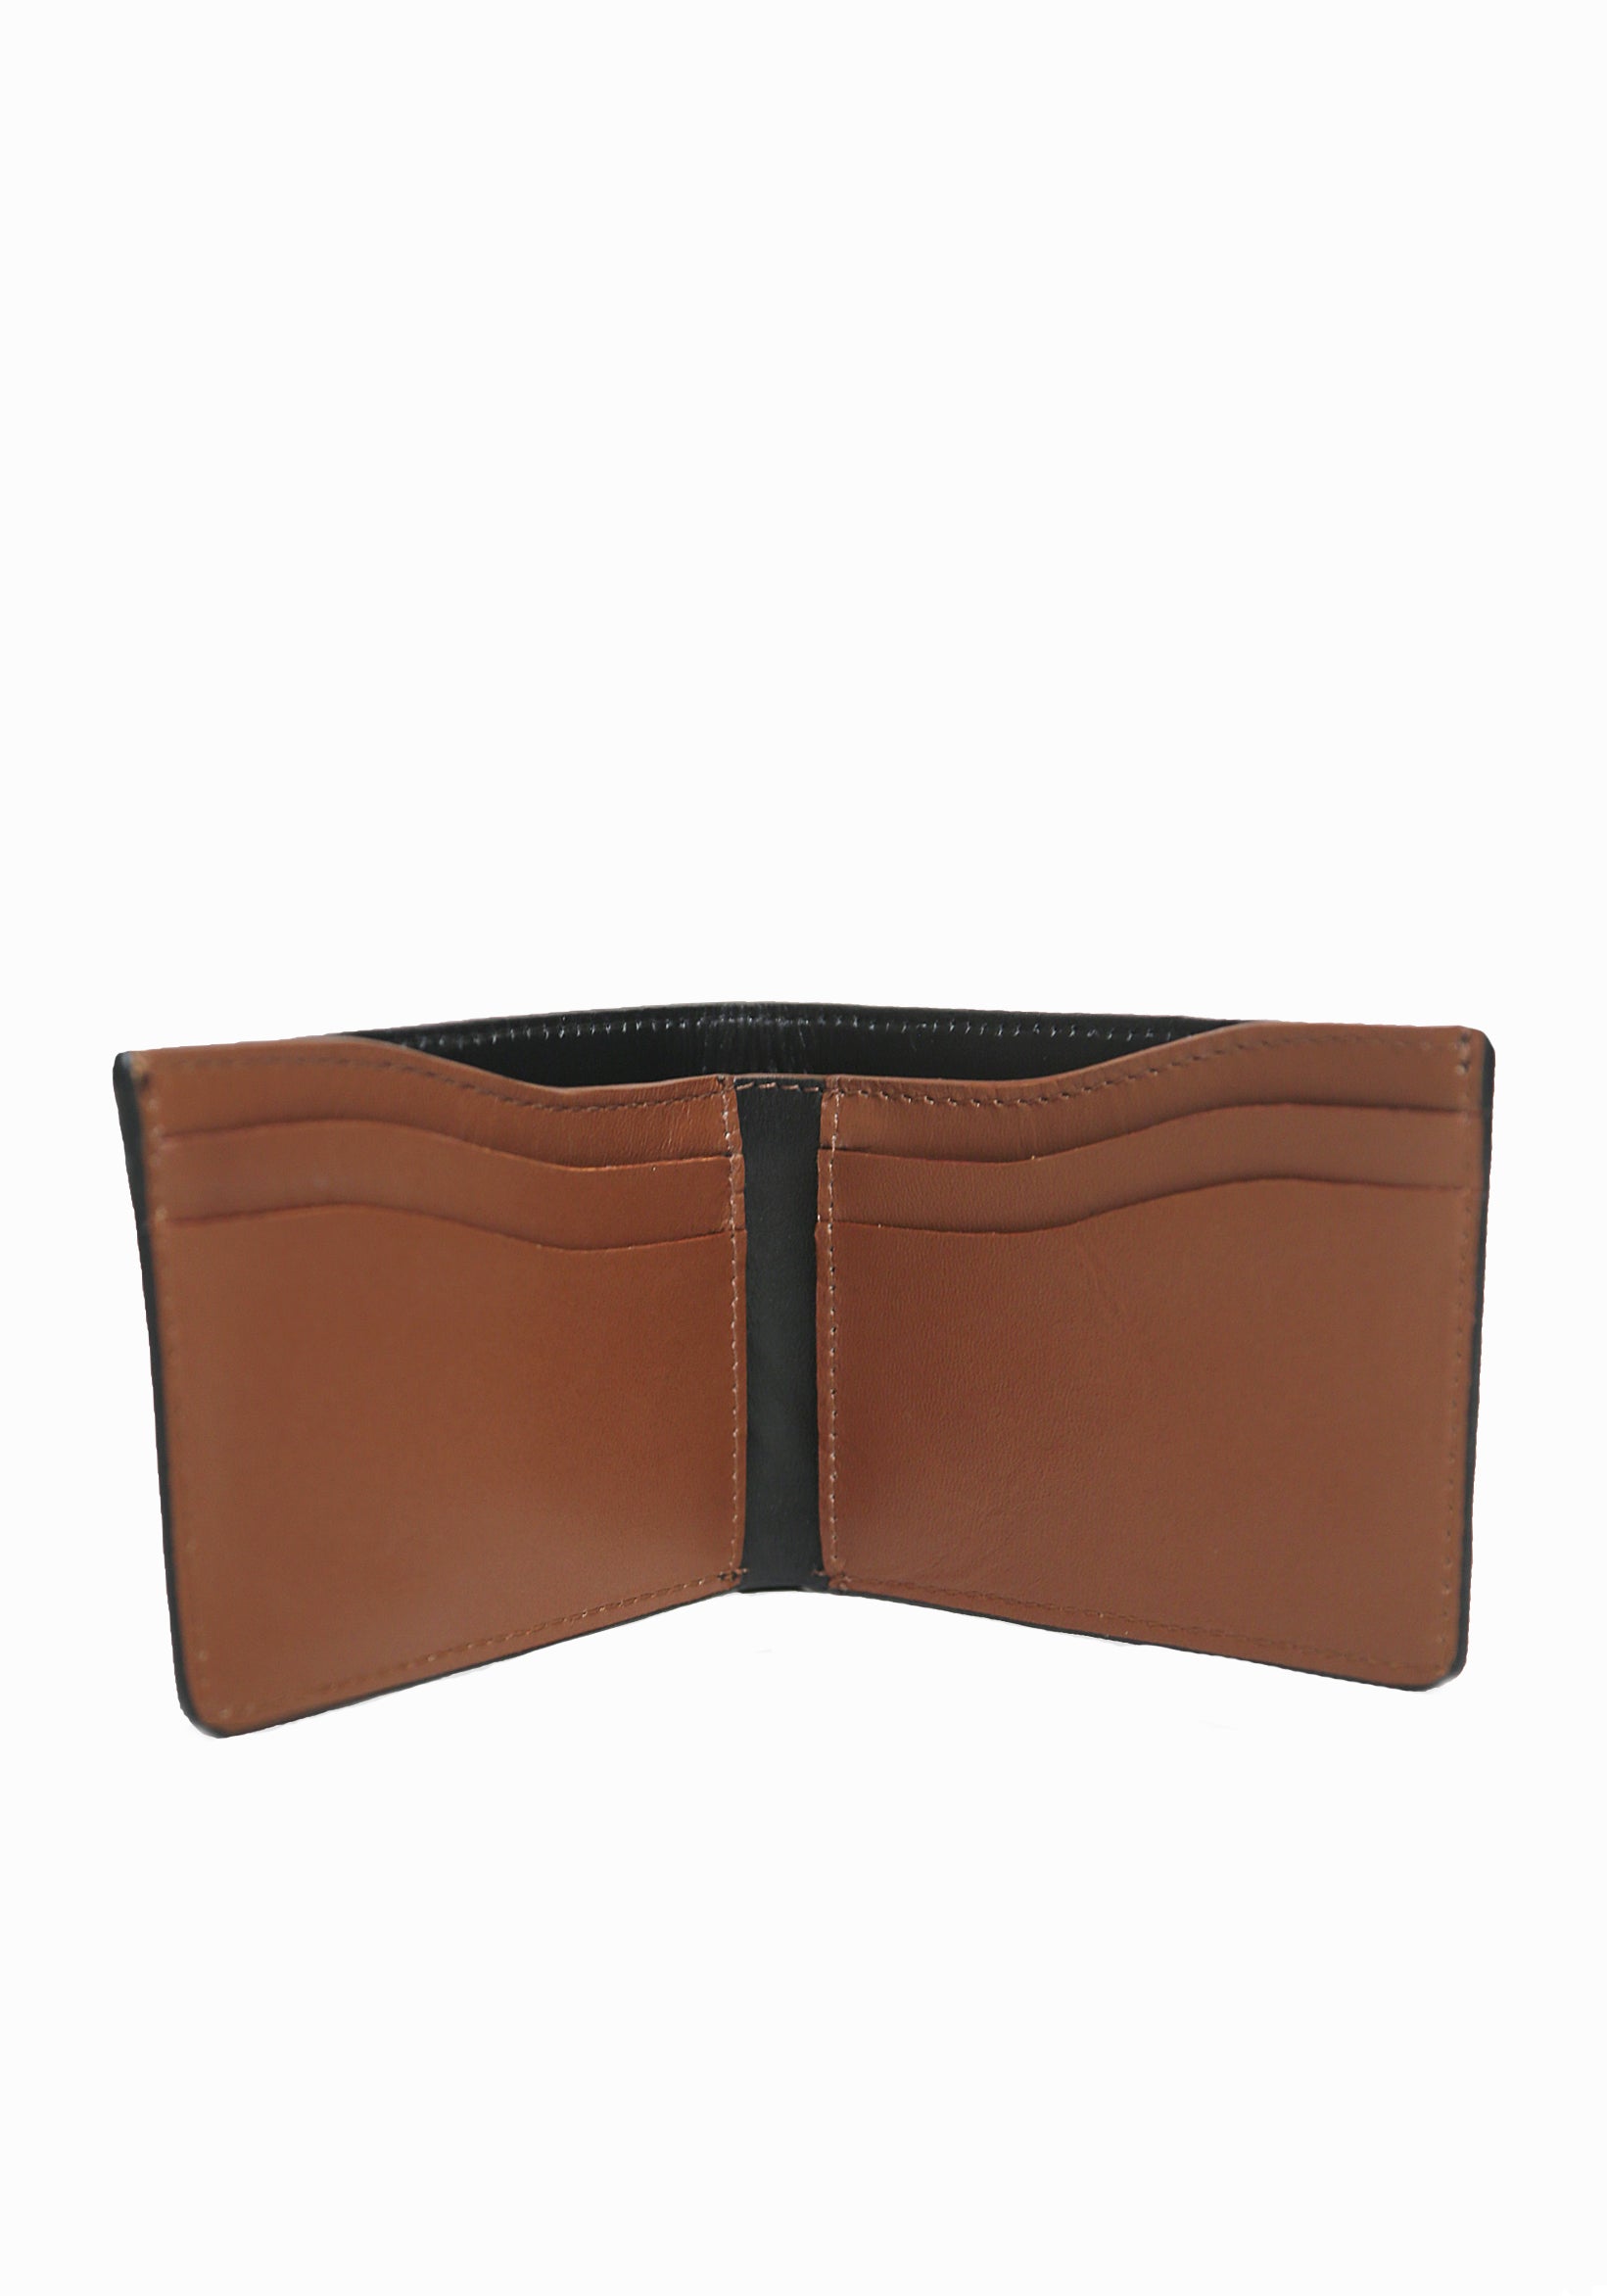 Brescia Wallet Black /Brown Leather 